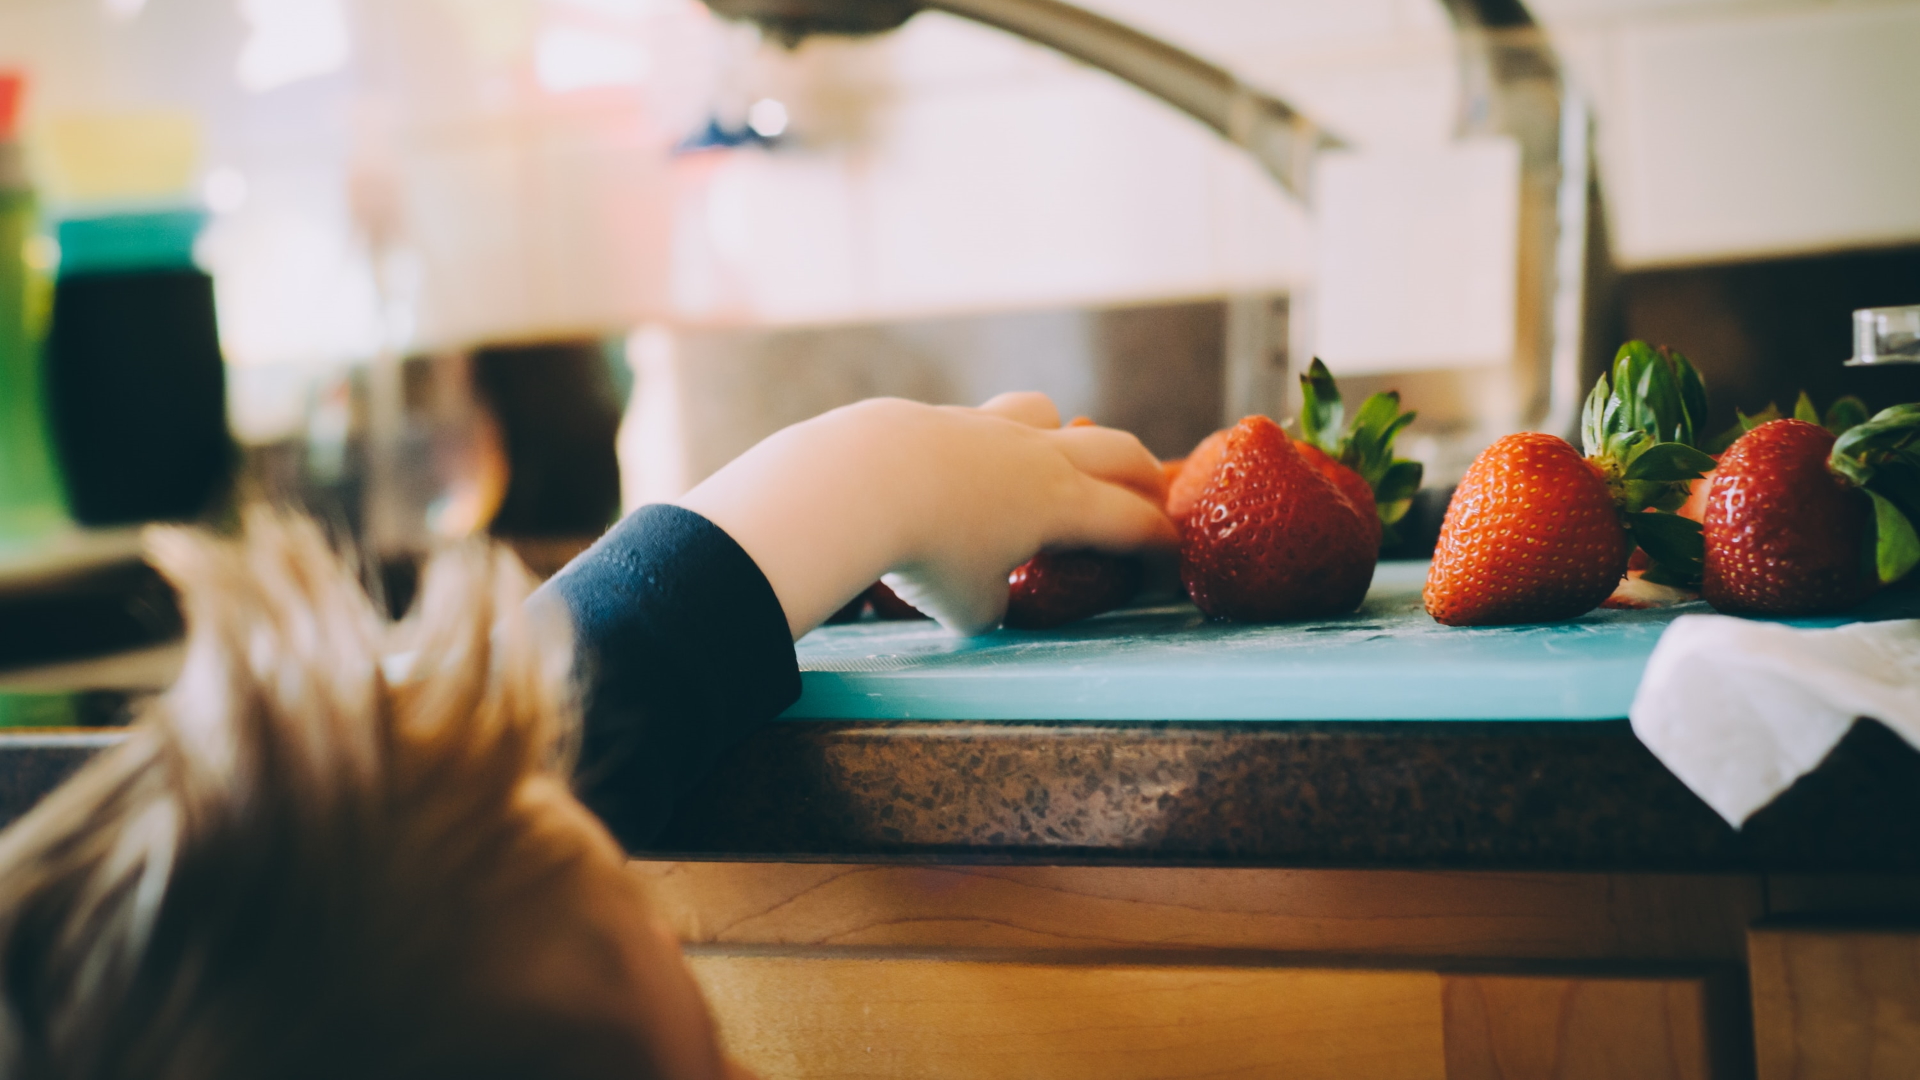 child reaching for strawberries